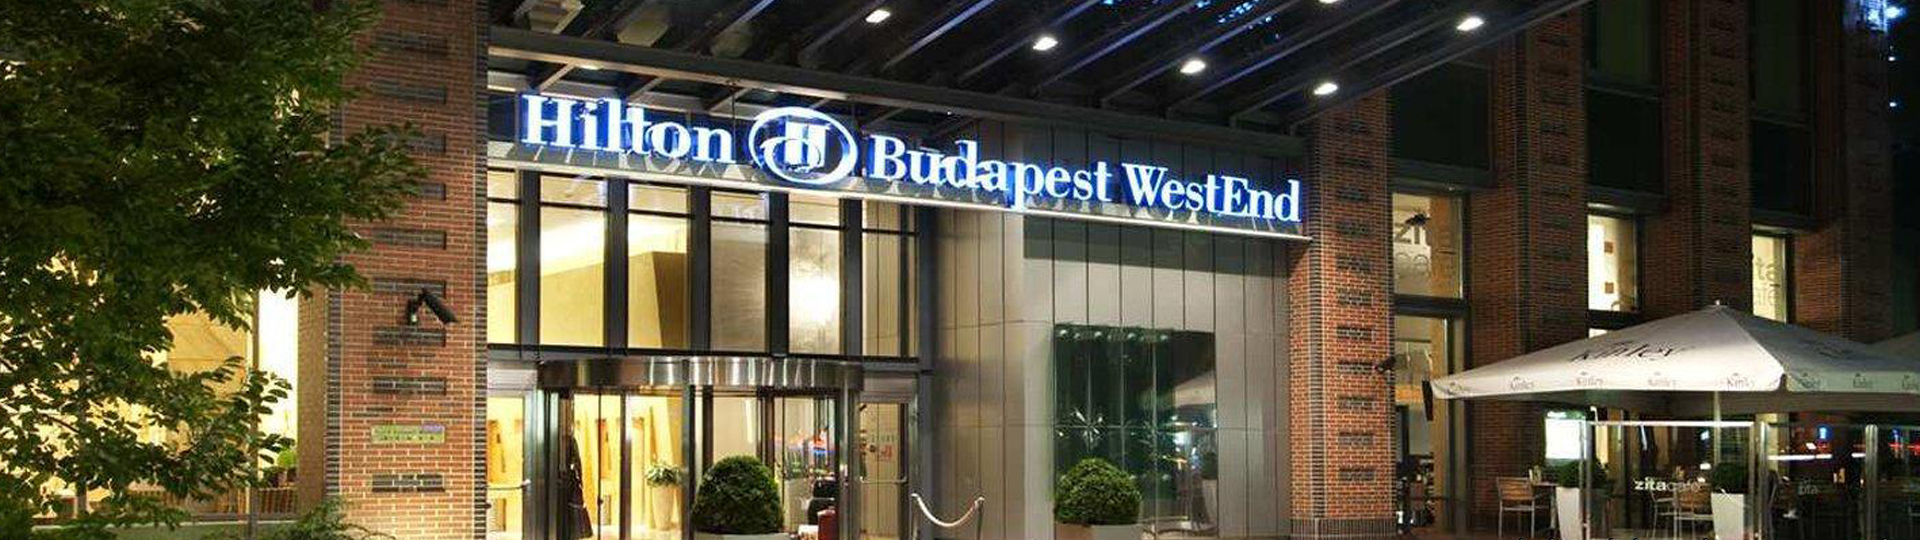 Westend Hilton Budapest